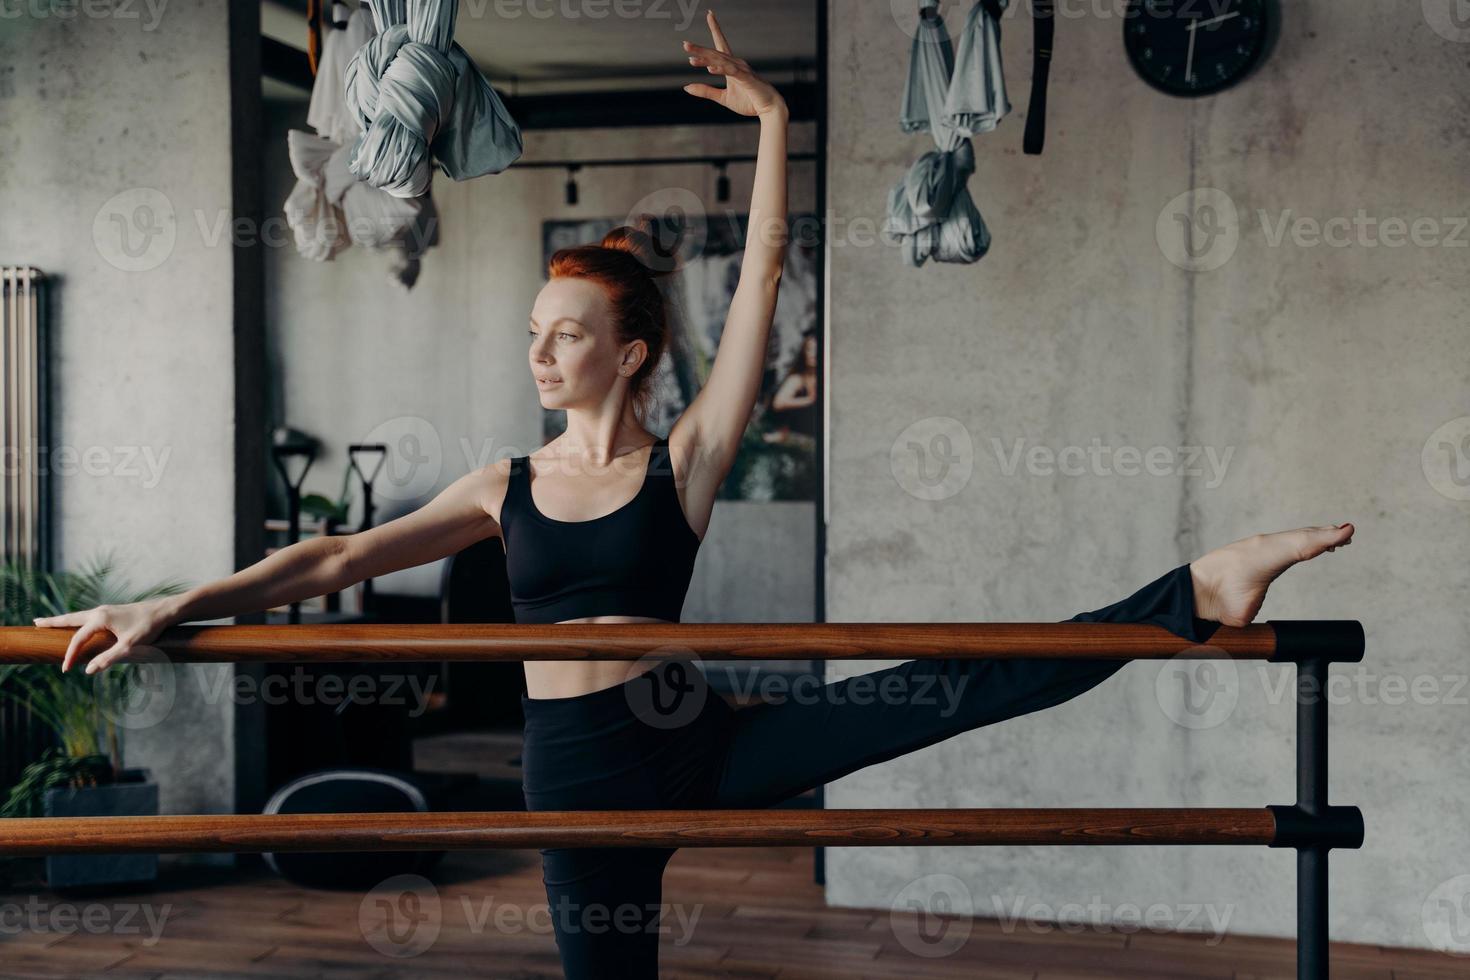 jovem bailarina ruiva atlética esticando a perna na barra de balé no estúdio de fitness foto